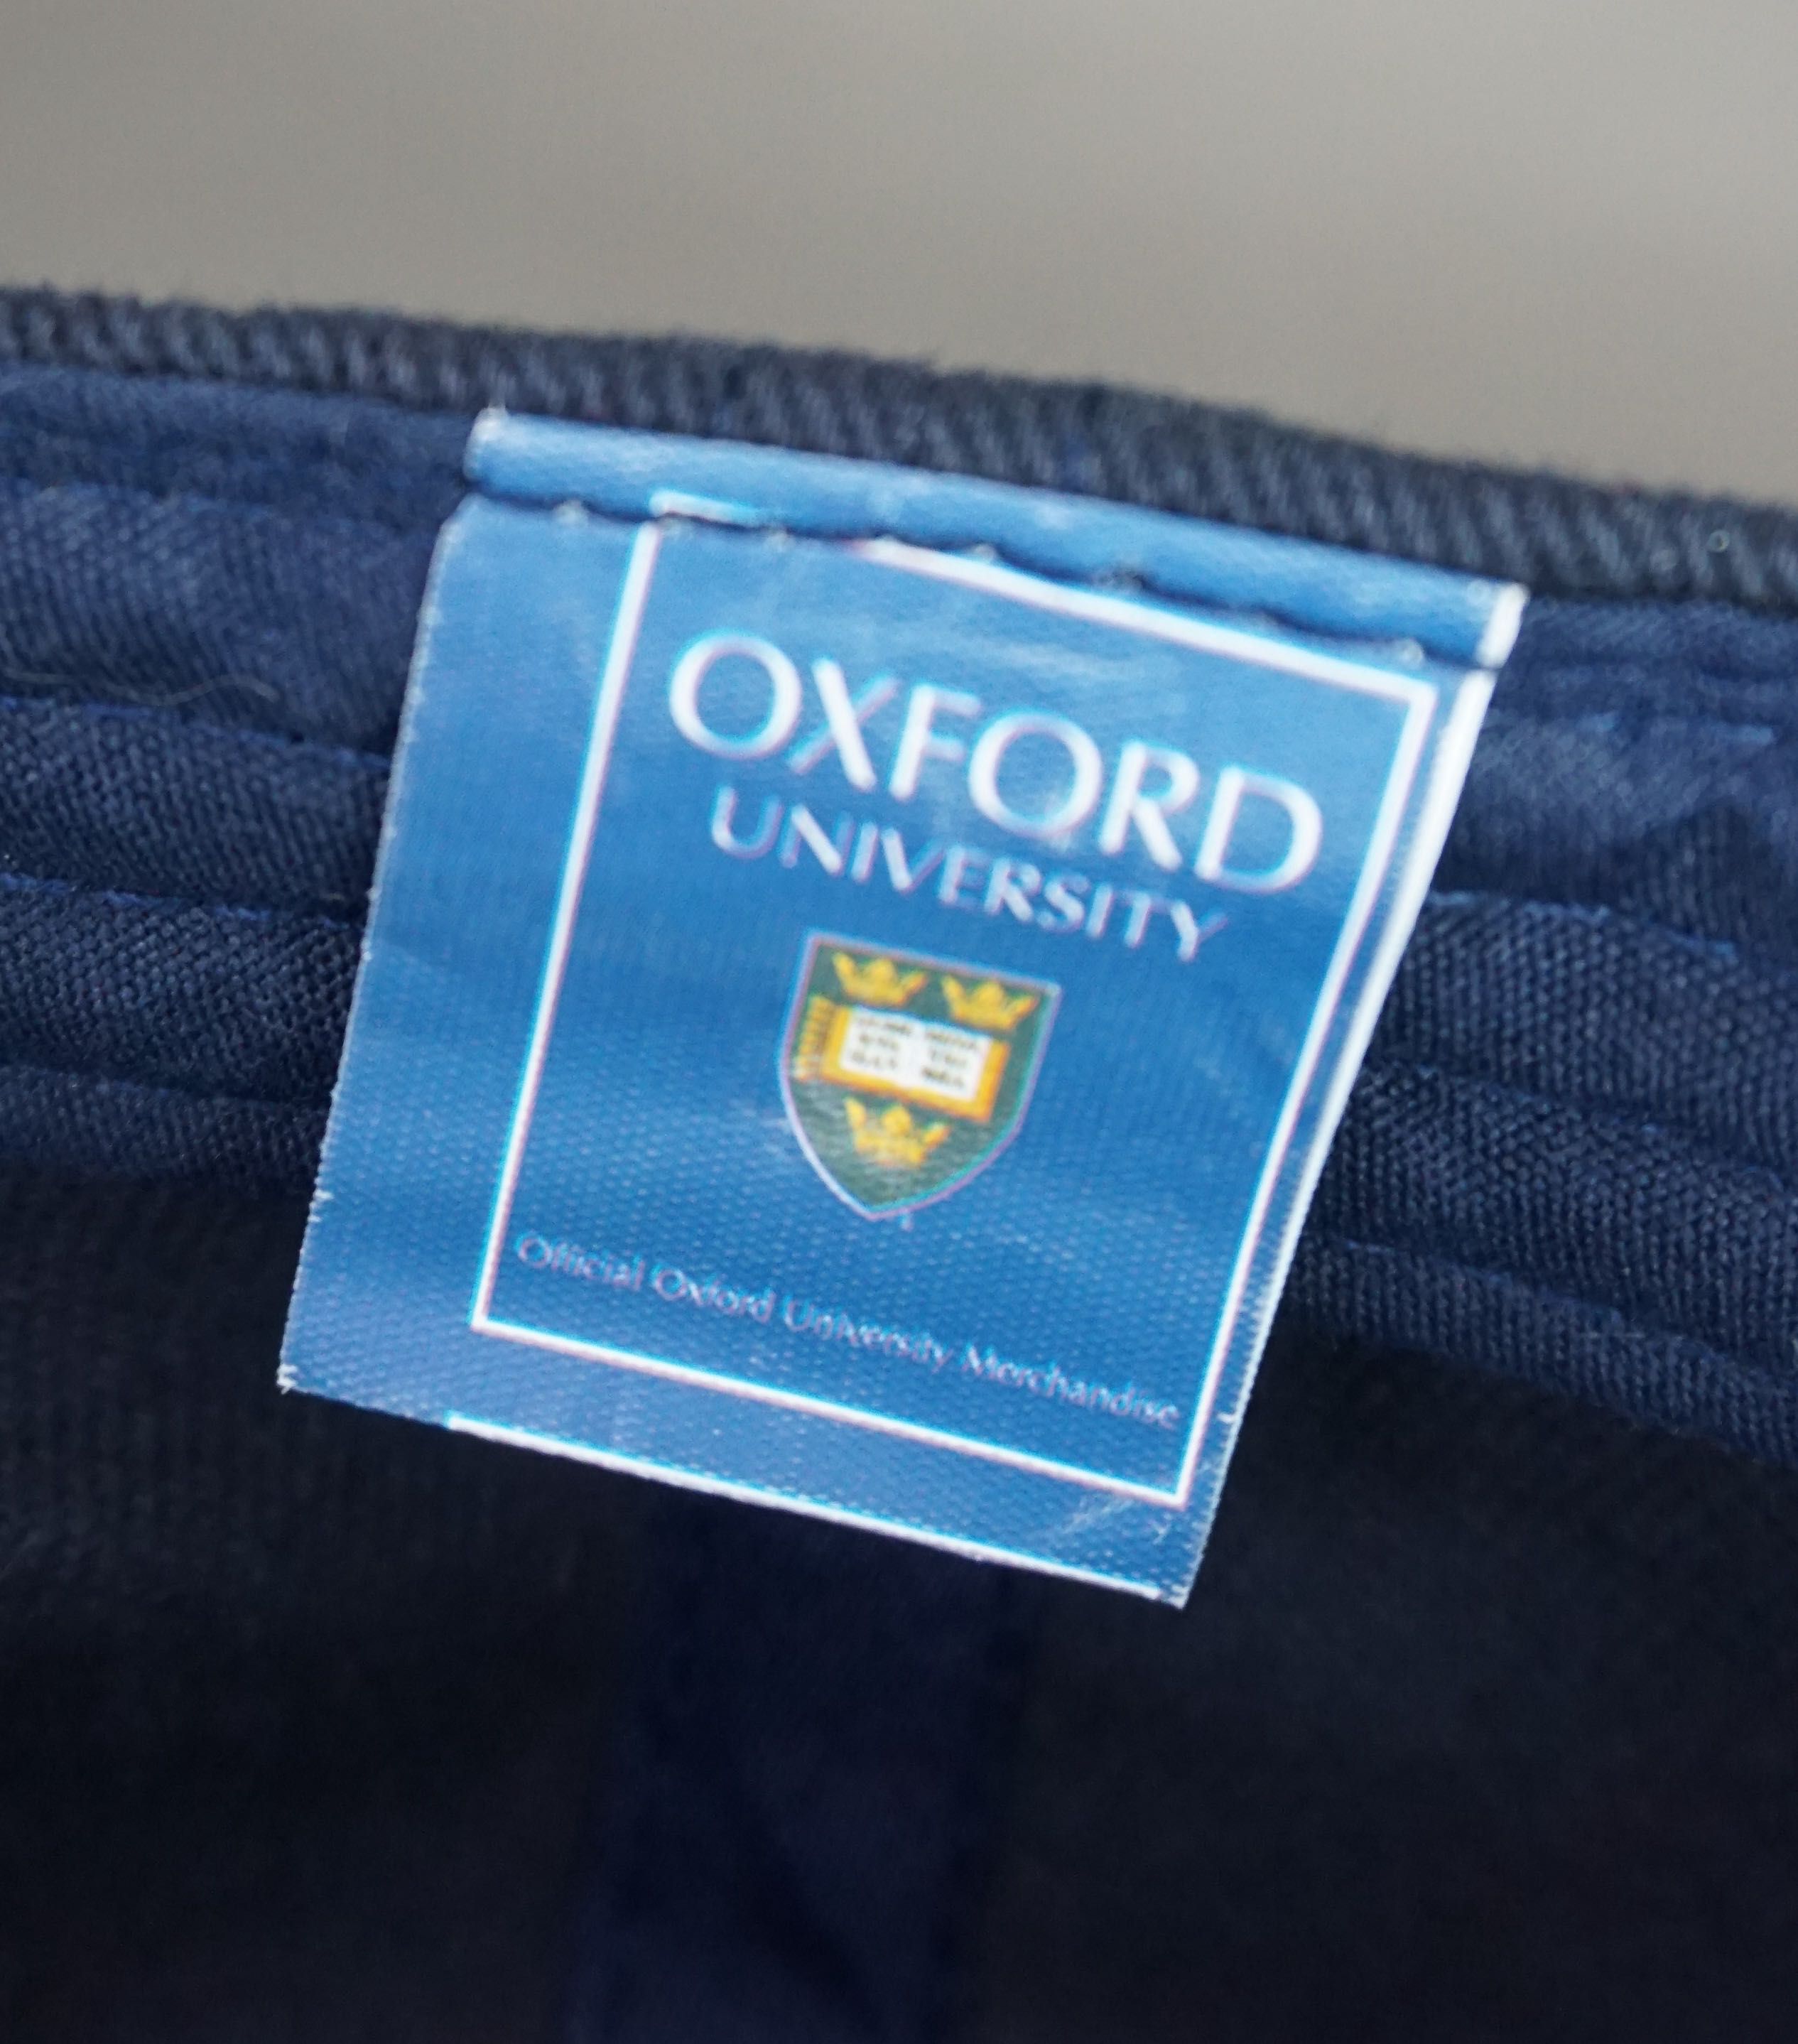 Czapka Oxford University r. OS